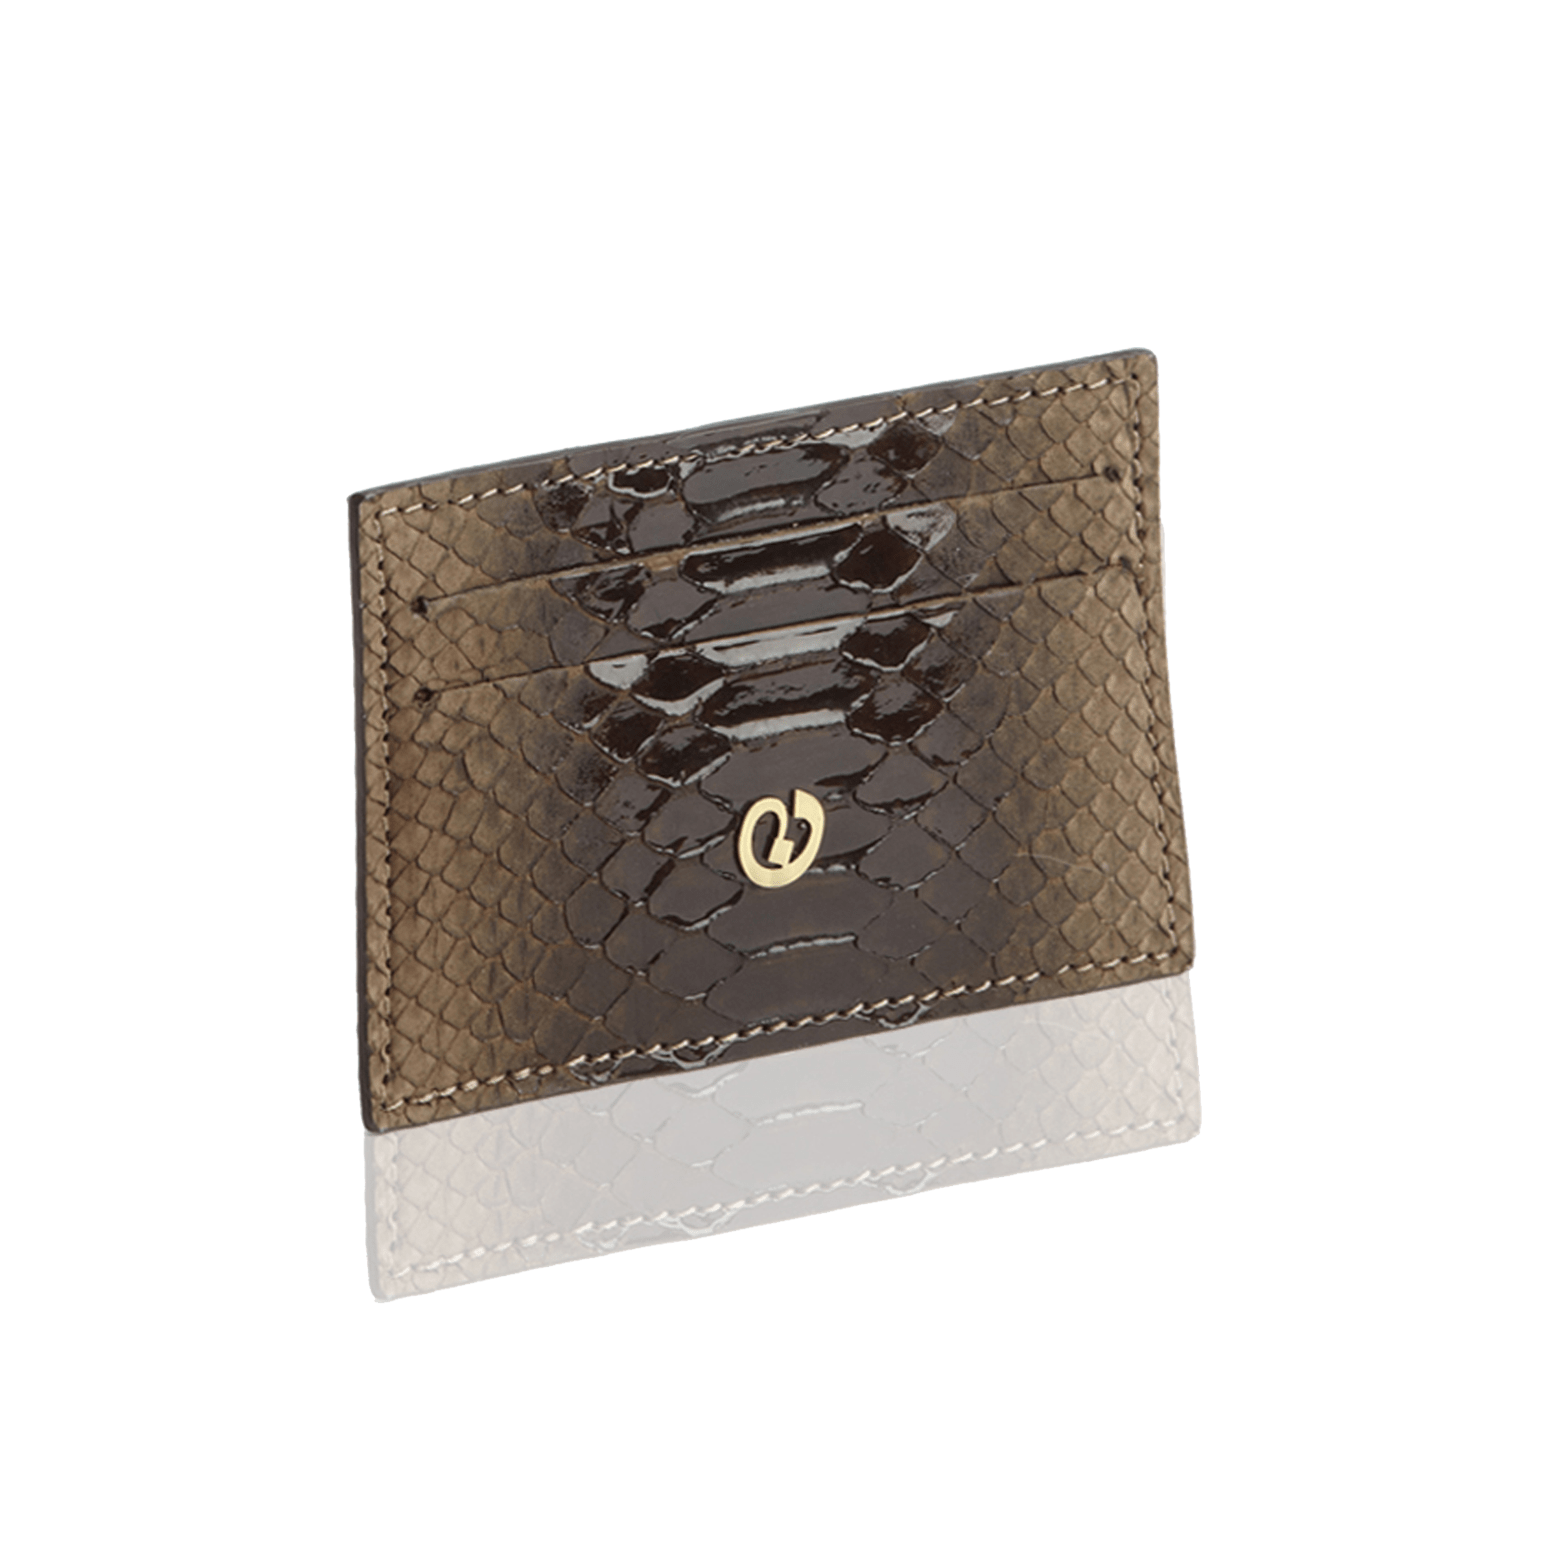 NIB 100%AUTH CHANEL Classic Black Lambskin Pearl Crush Card Holder Belt Bag